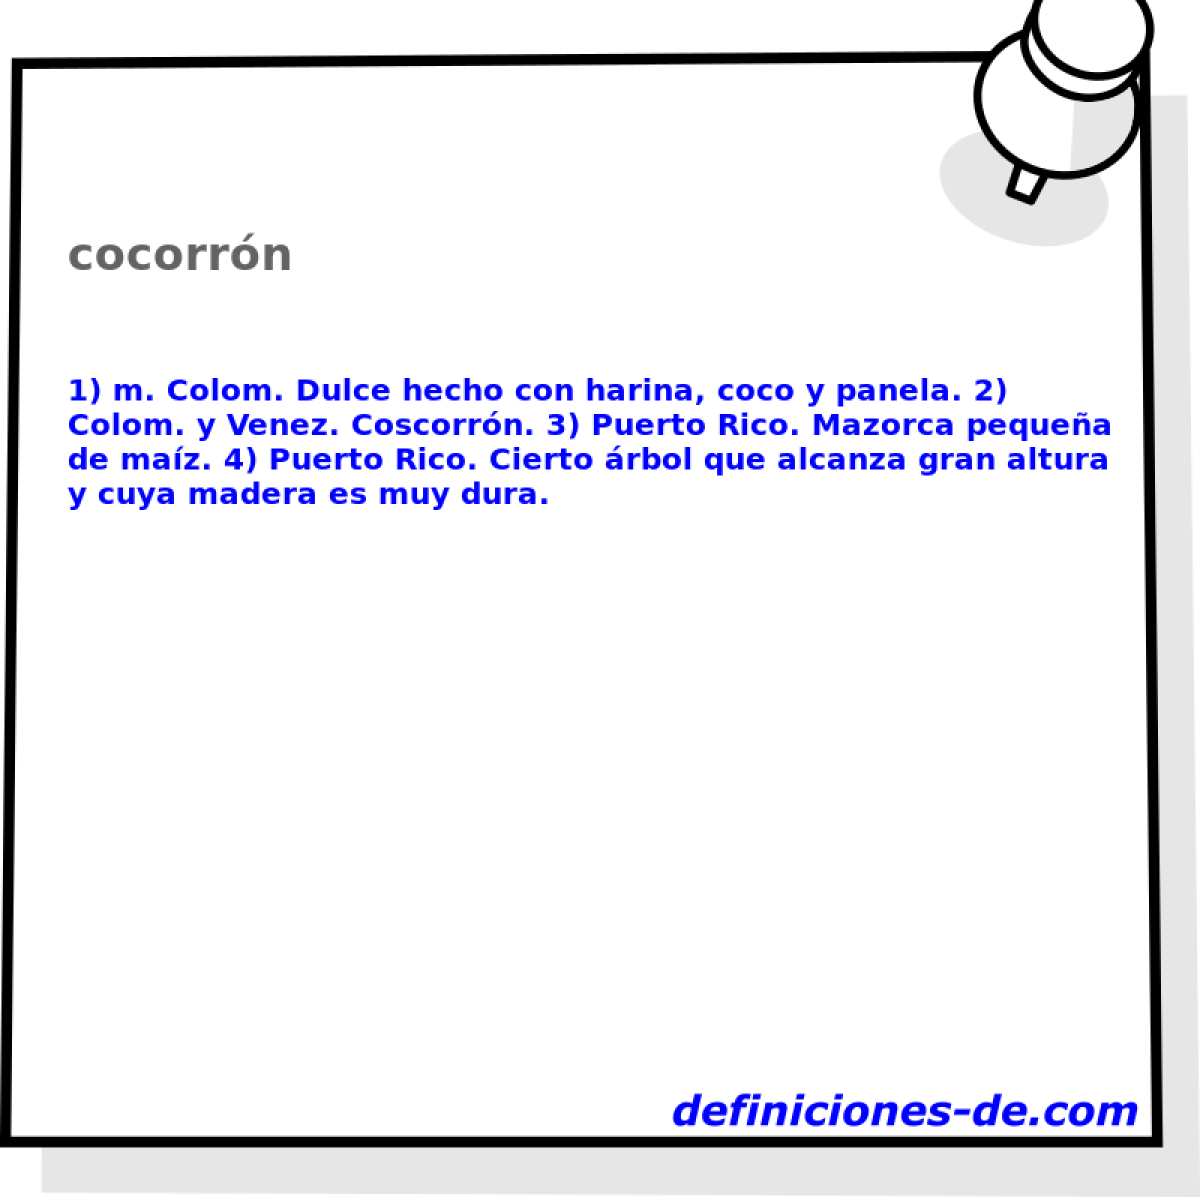 cocorrn 